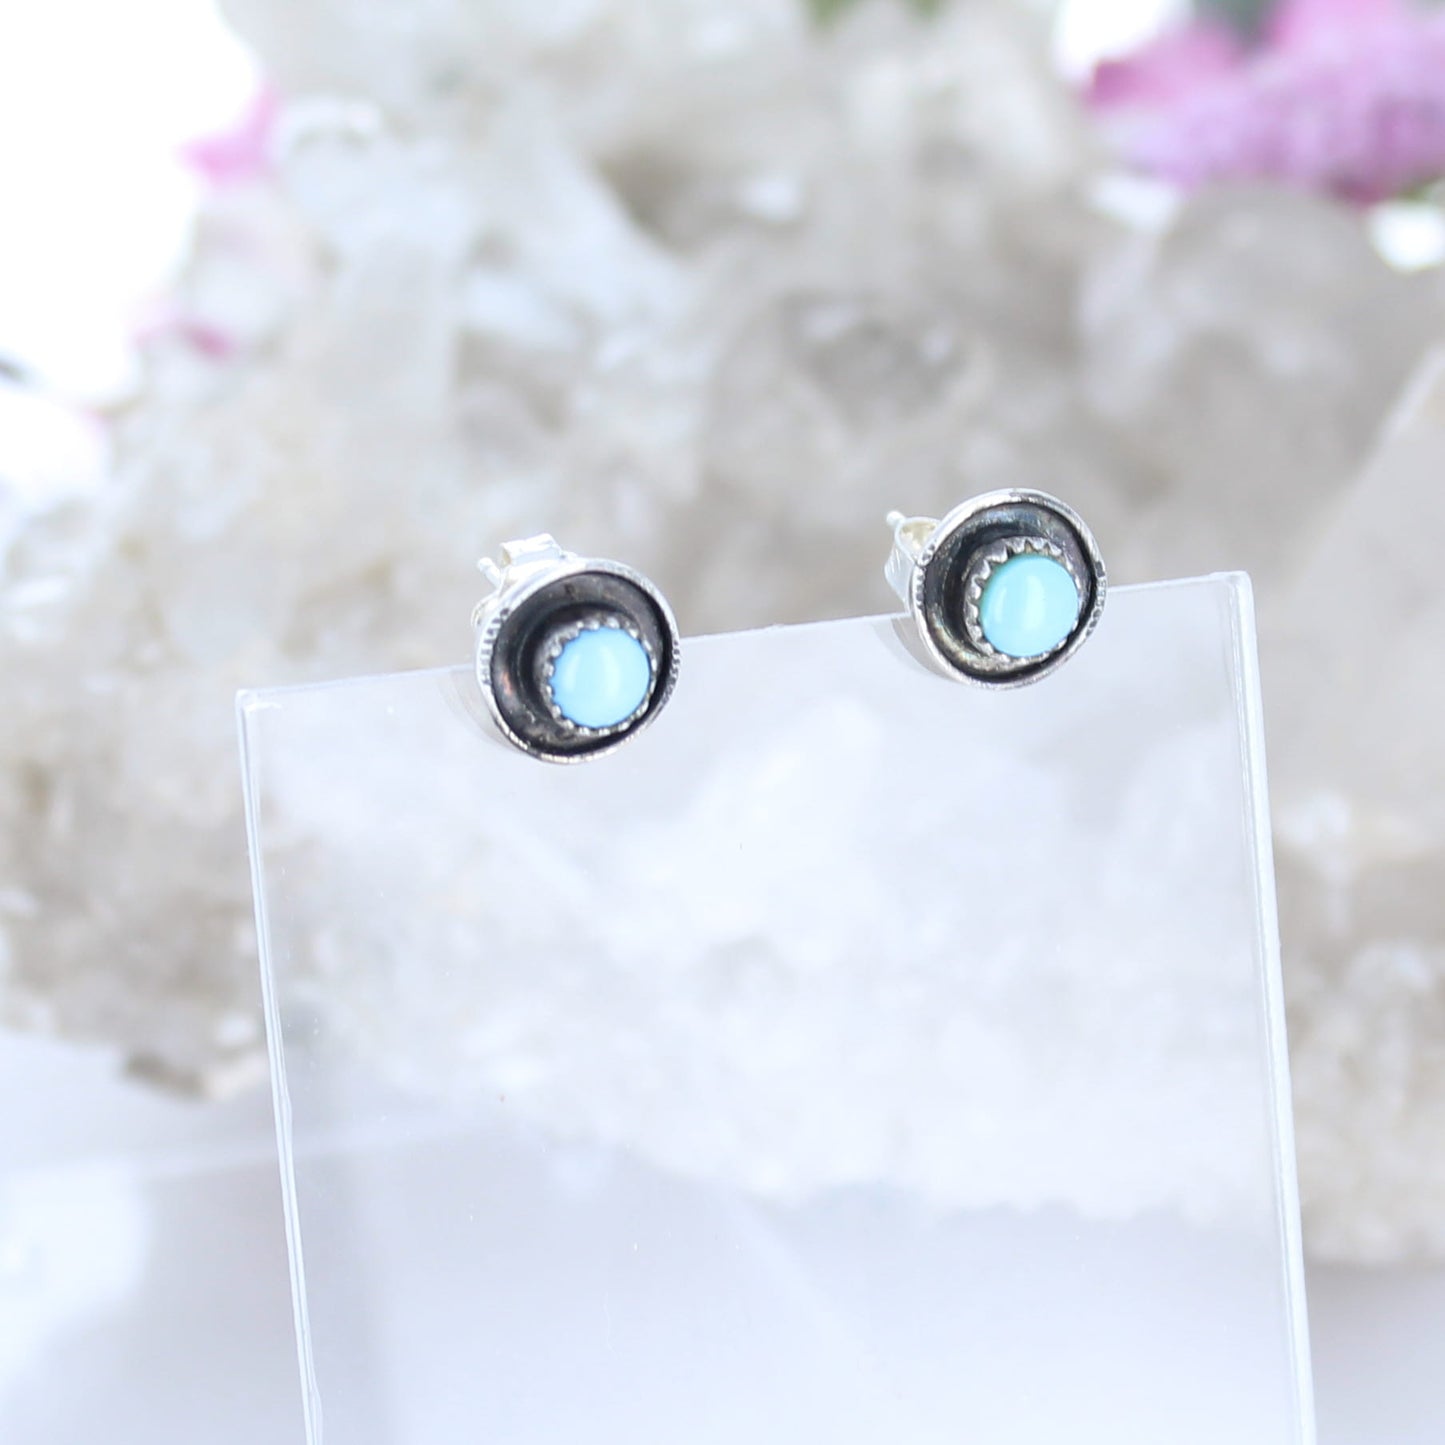 Kazakhstan Turquoise Sterling Earrings Small Posts 4mm